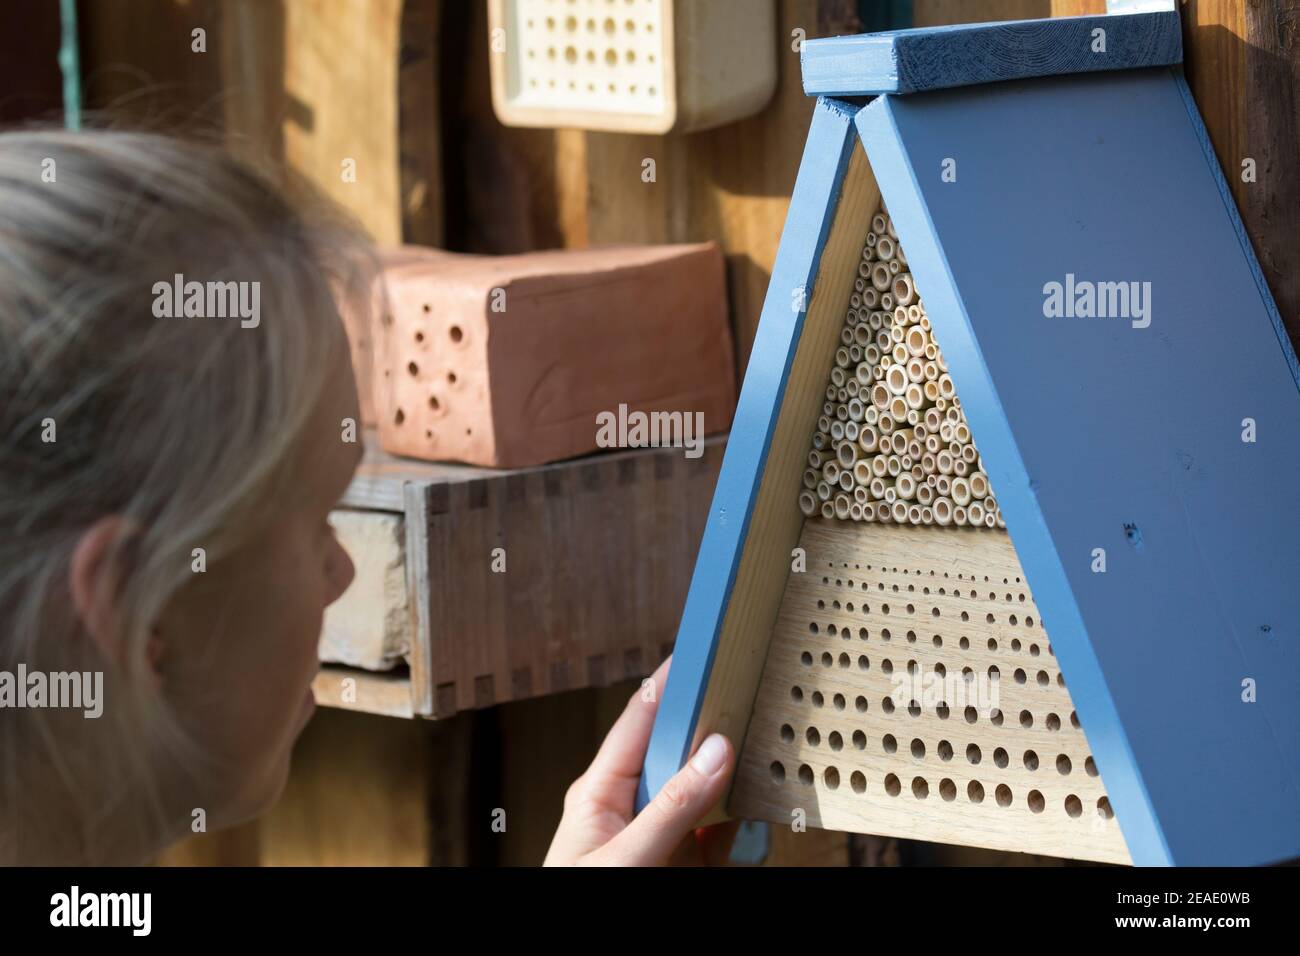 Beobachtung an Wildbienen-Nisthilfen, junge Frau beobachtet Wildbienen an Nisthilfen. Wildbienen-Nisthilfen, Wildbienen-Nisthilfe selbermachen, selber Banque D'Images